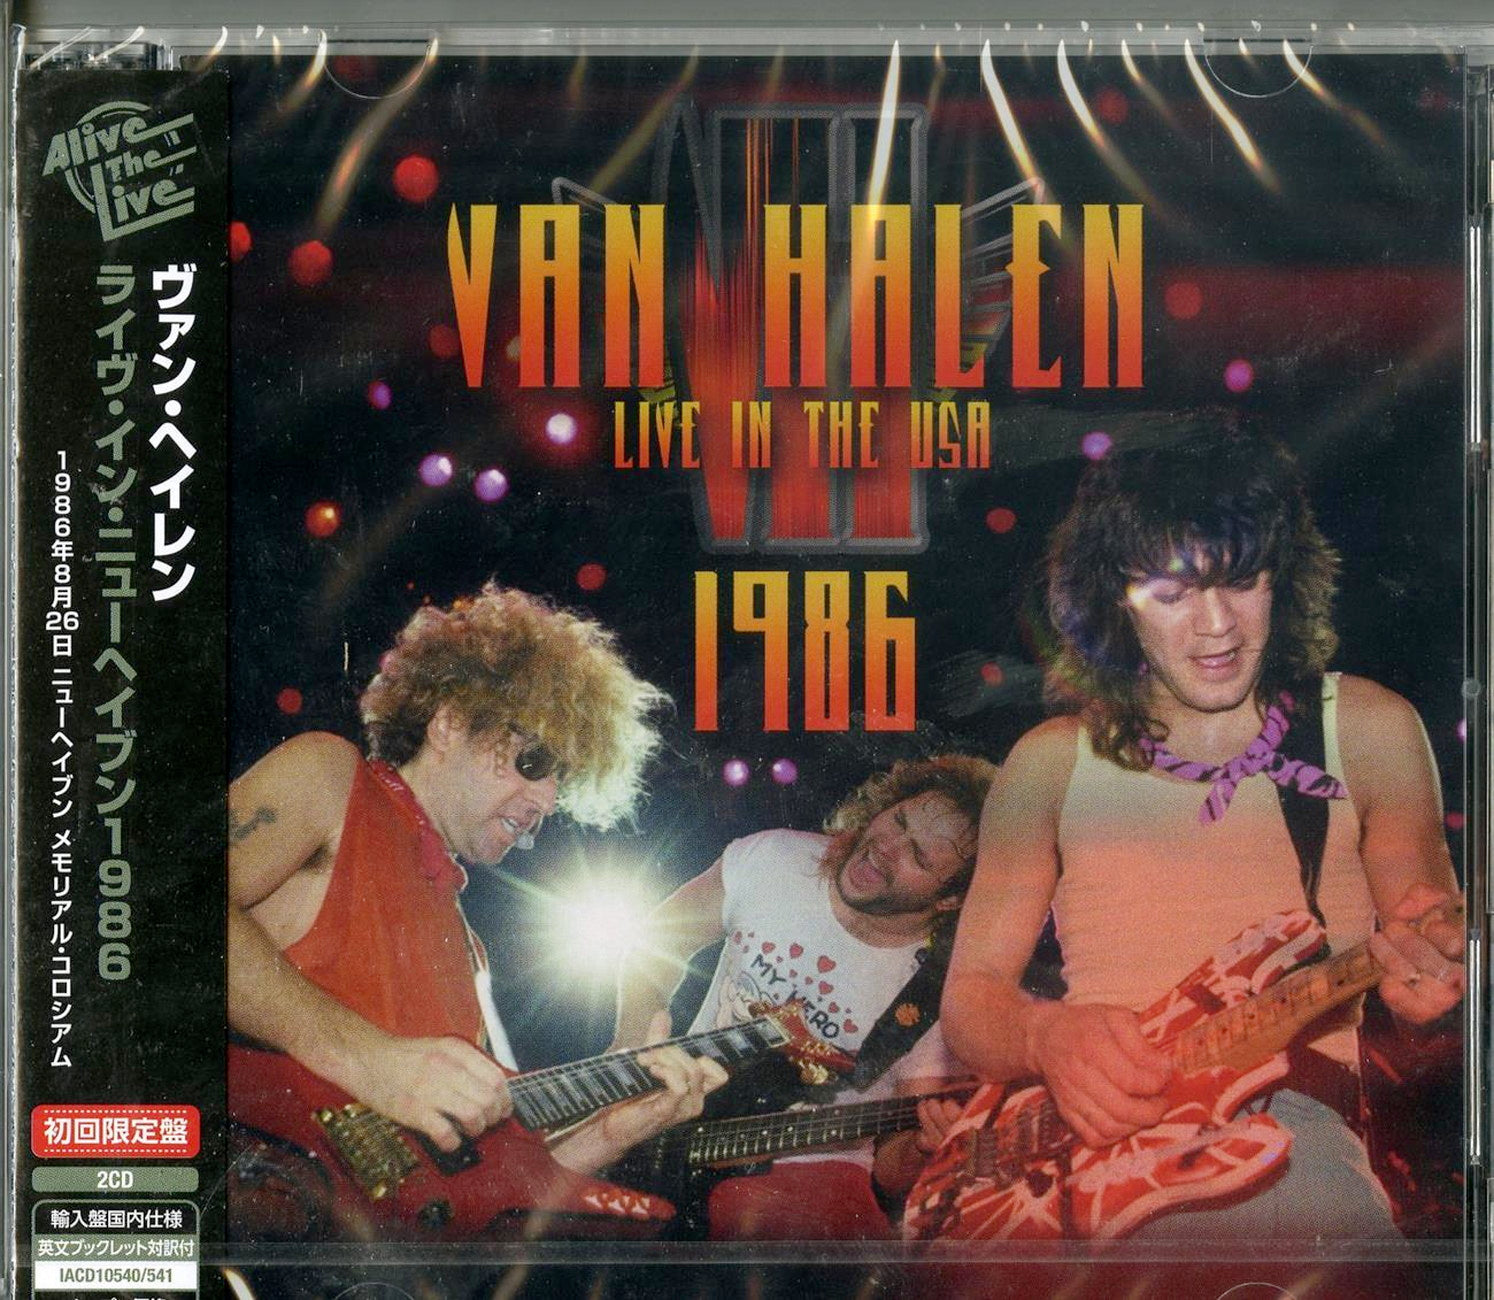 Van Halen - Live In The Usa 1986 - Import 2 CD Bonus Track Limited